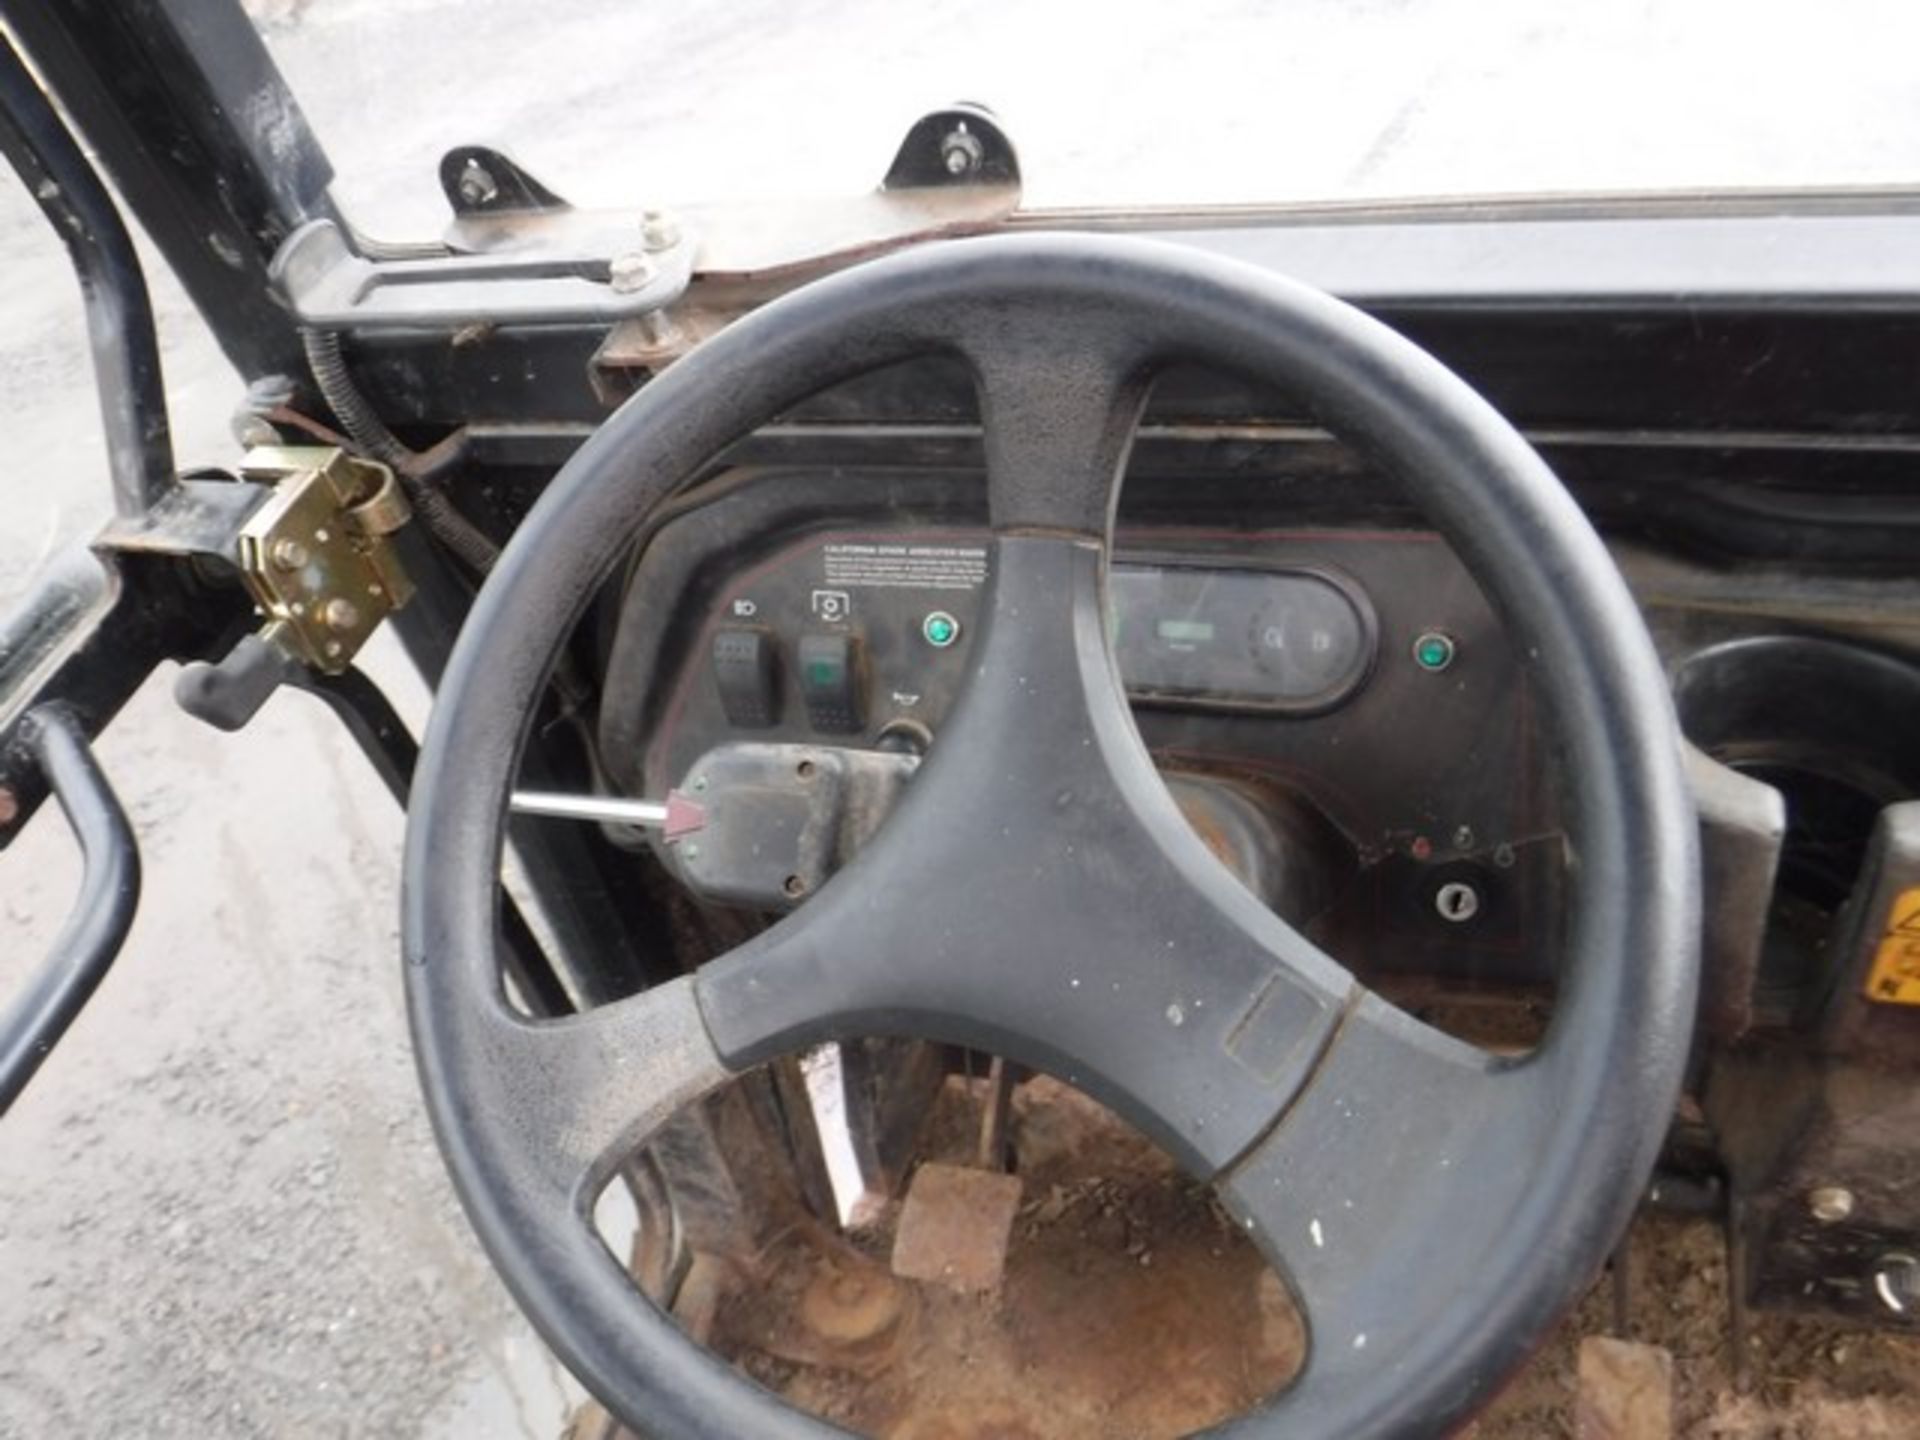 2011 TORO WORKMAN HDX 4WD, S/N 311000136, REG - SP60EFU, 4 X 4 UTILITY VEHICLE, VEHICLE NOT DRIVING - Image 5 of 14